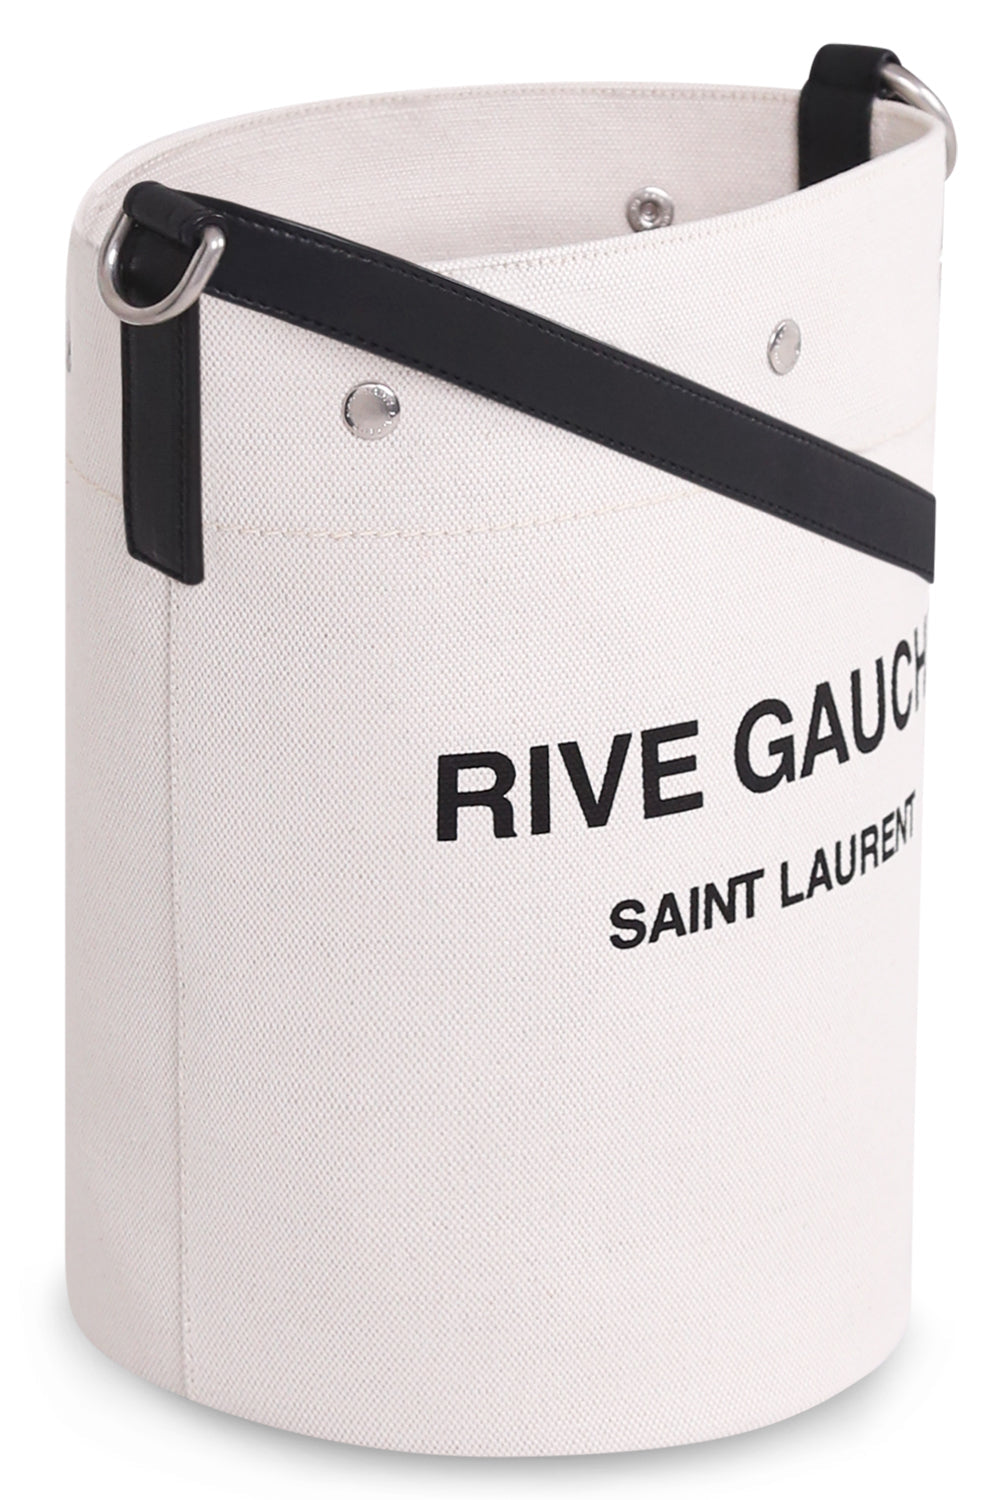 SAINT LAURENT BAGS WHITE RIVE GAUCHE NOE SEAU BUCKET BAG NATURAL